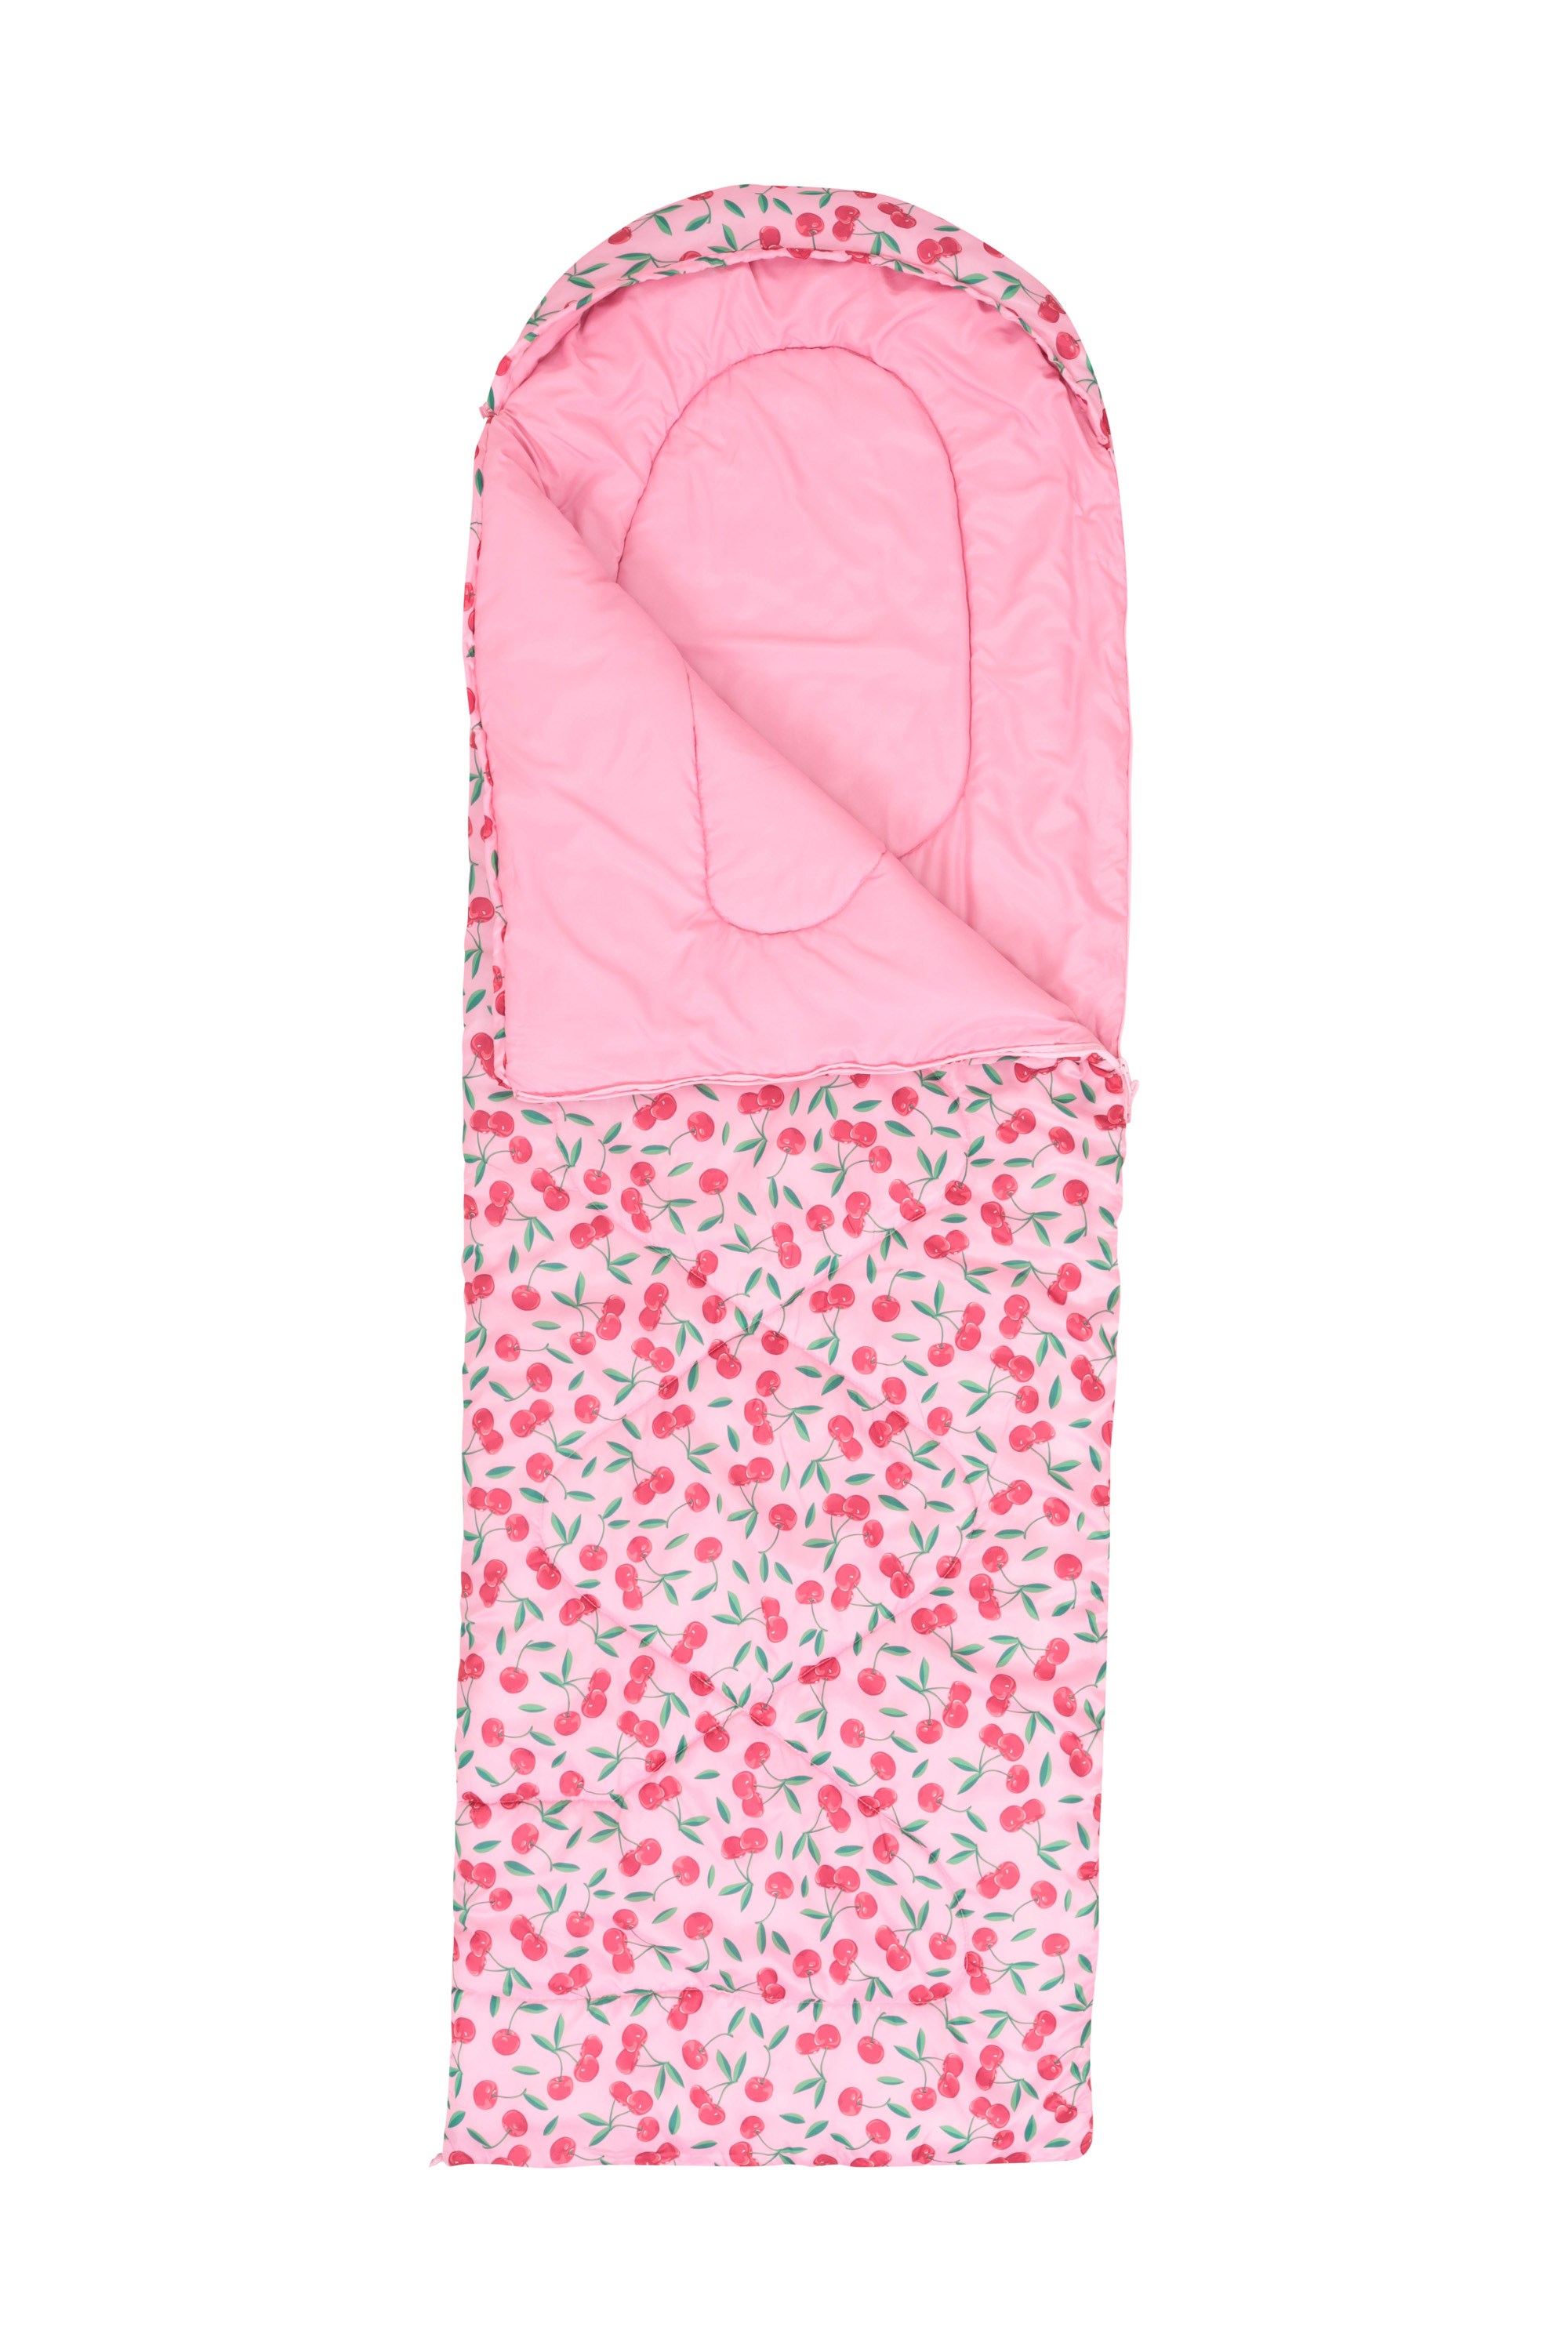 Mountain Warehouse Apex 250 Square Flamingo Sleeping Bag 2 Season Turquoise Pink 